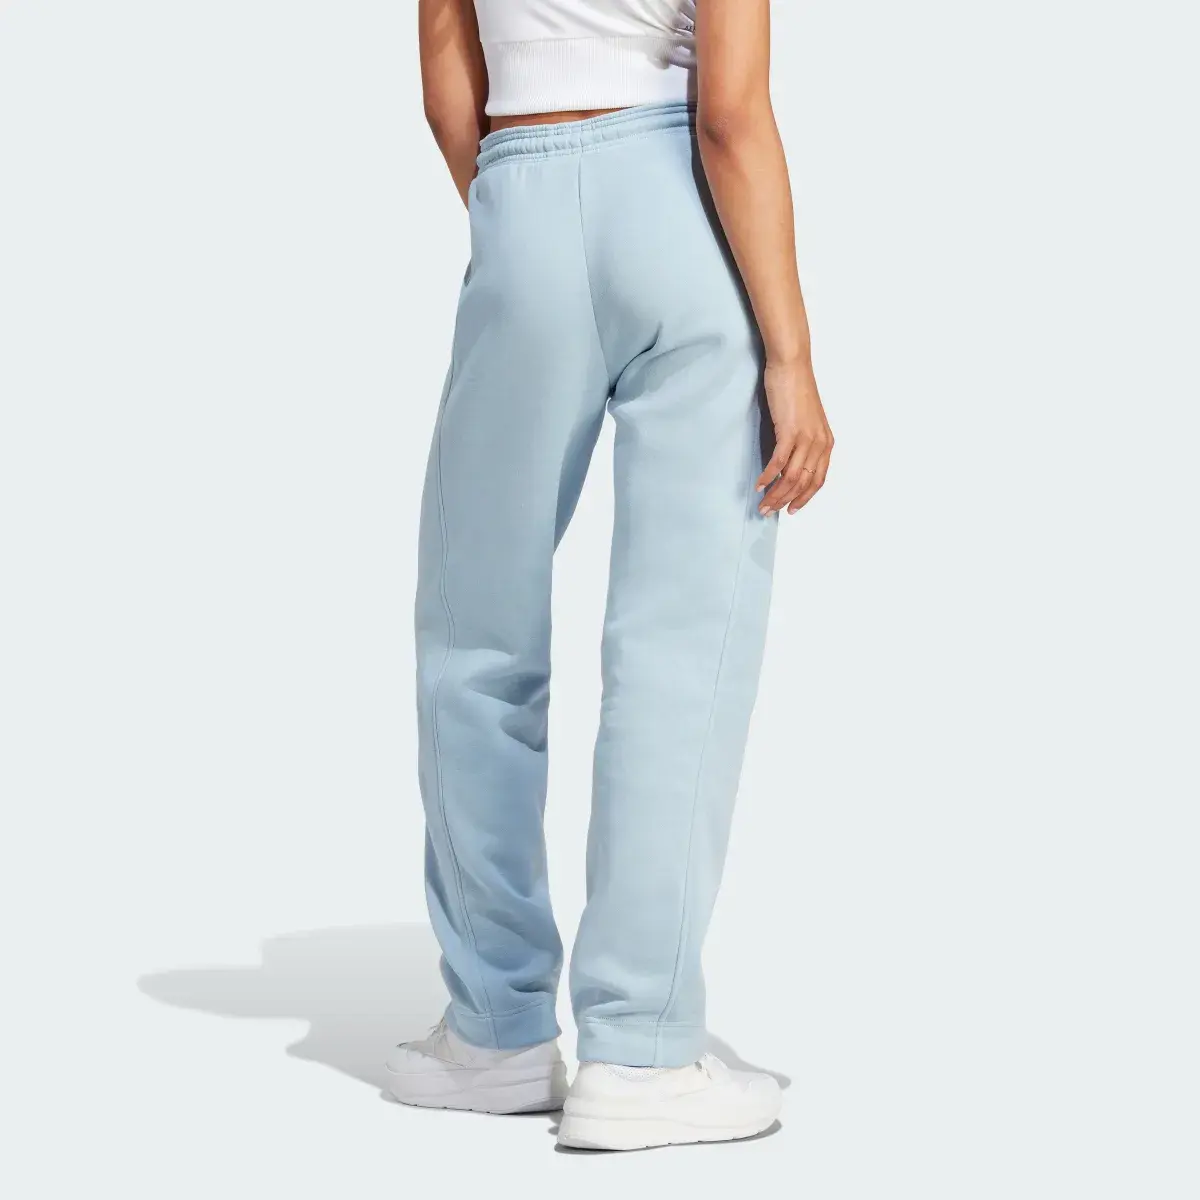 Adidas All SZN Fleece Graphic Pants. 2